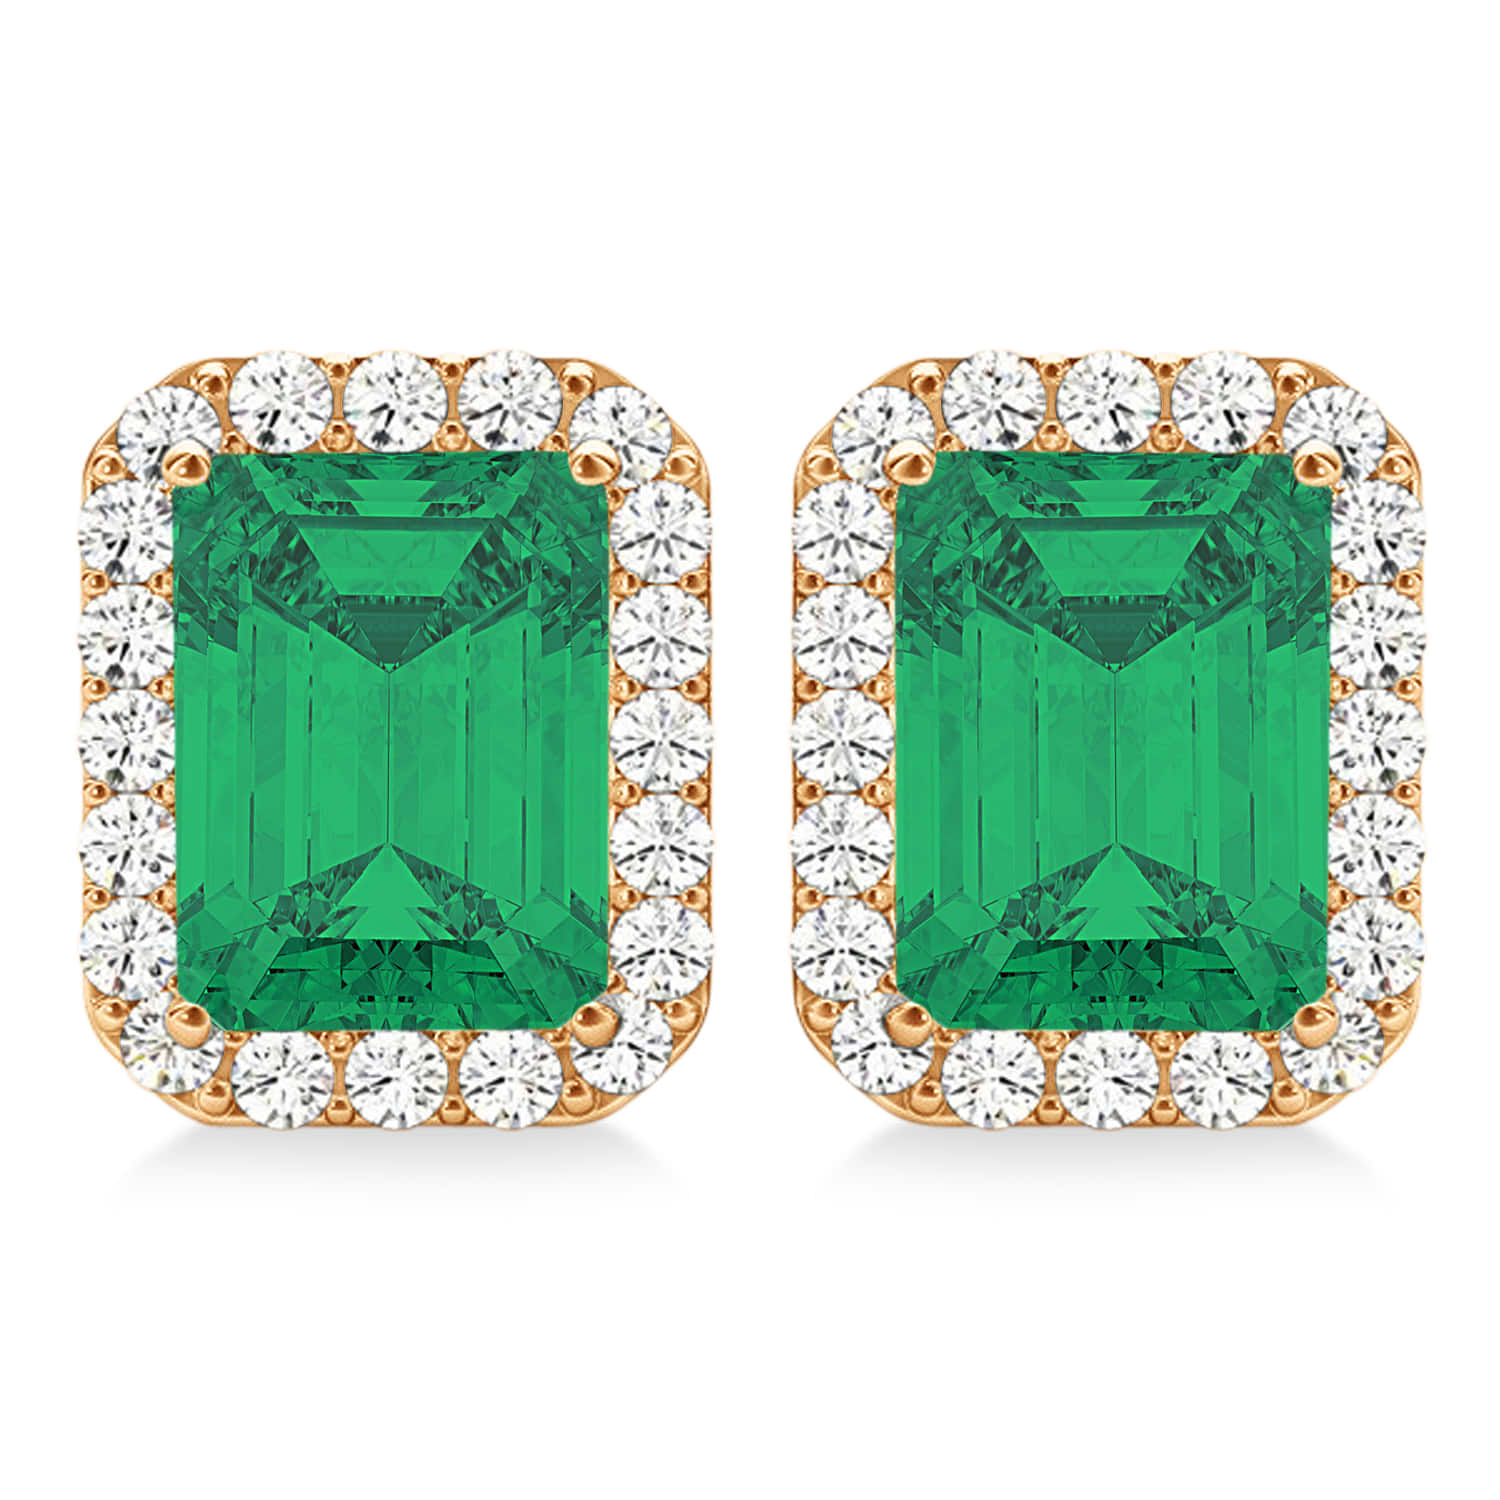 Emerald Cut Lab Emerald & Diamond Halo Earrings 14k Rose Gold (2.10ct)